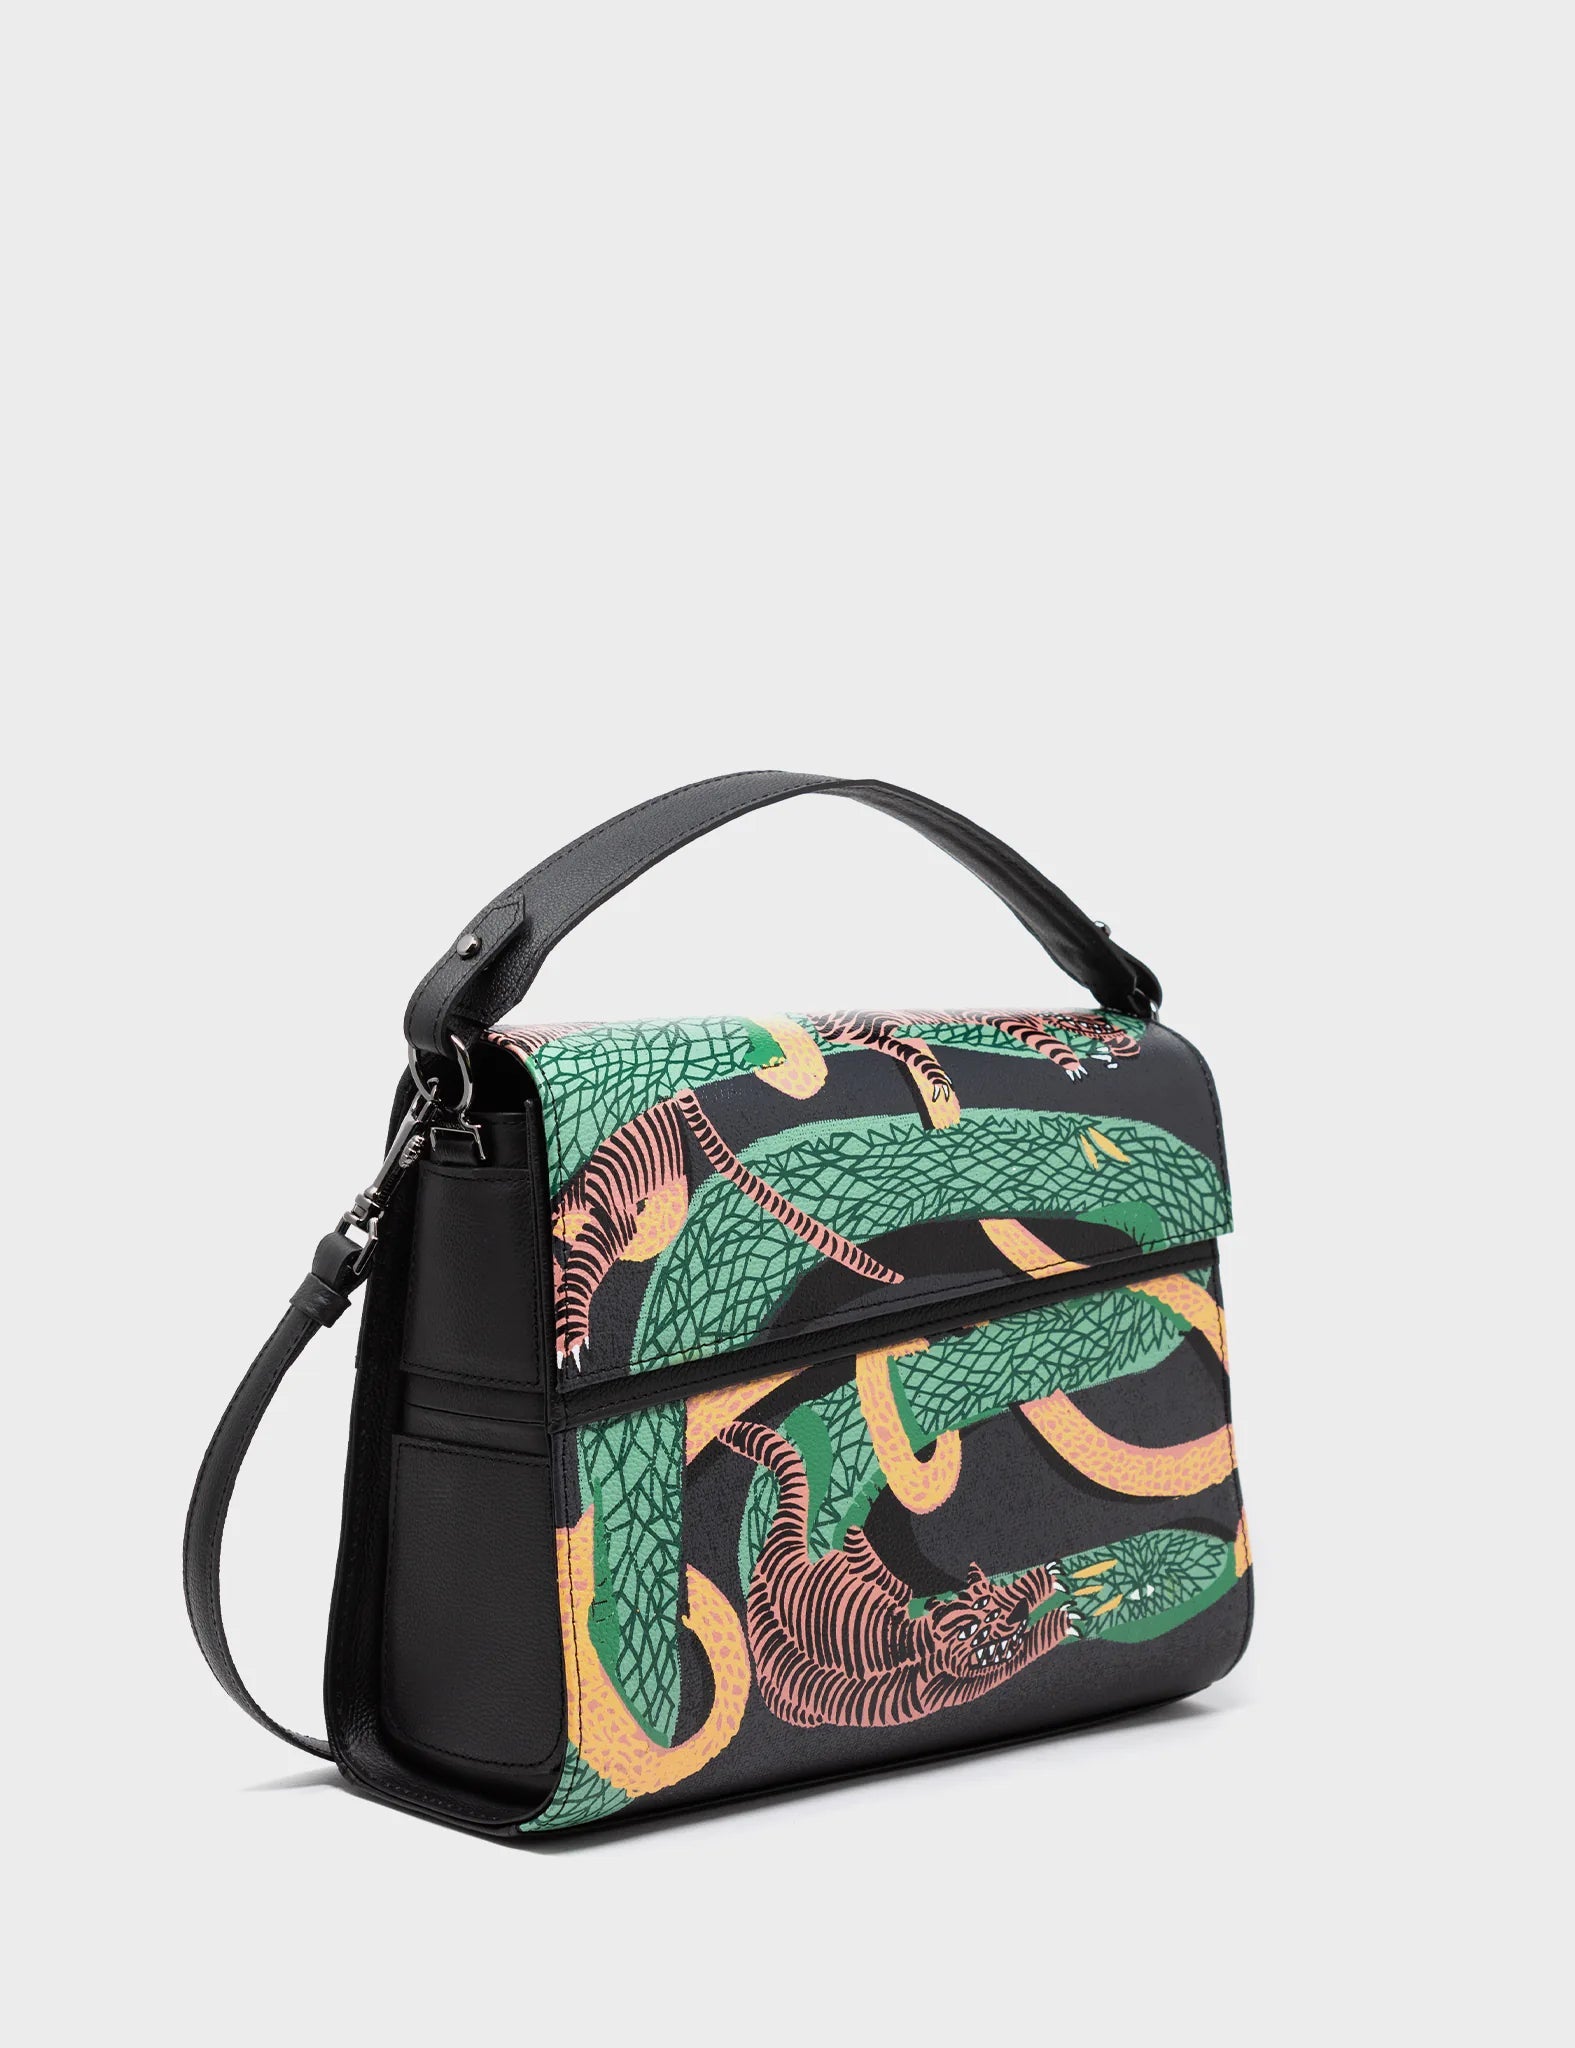 Medium Crossbody Handbag Black Leather Tiger And Snake Print – Min 